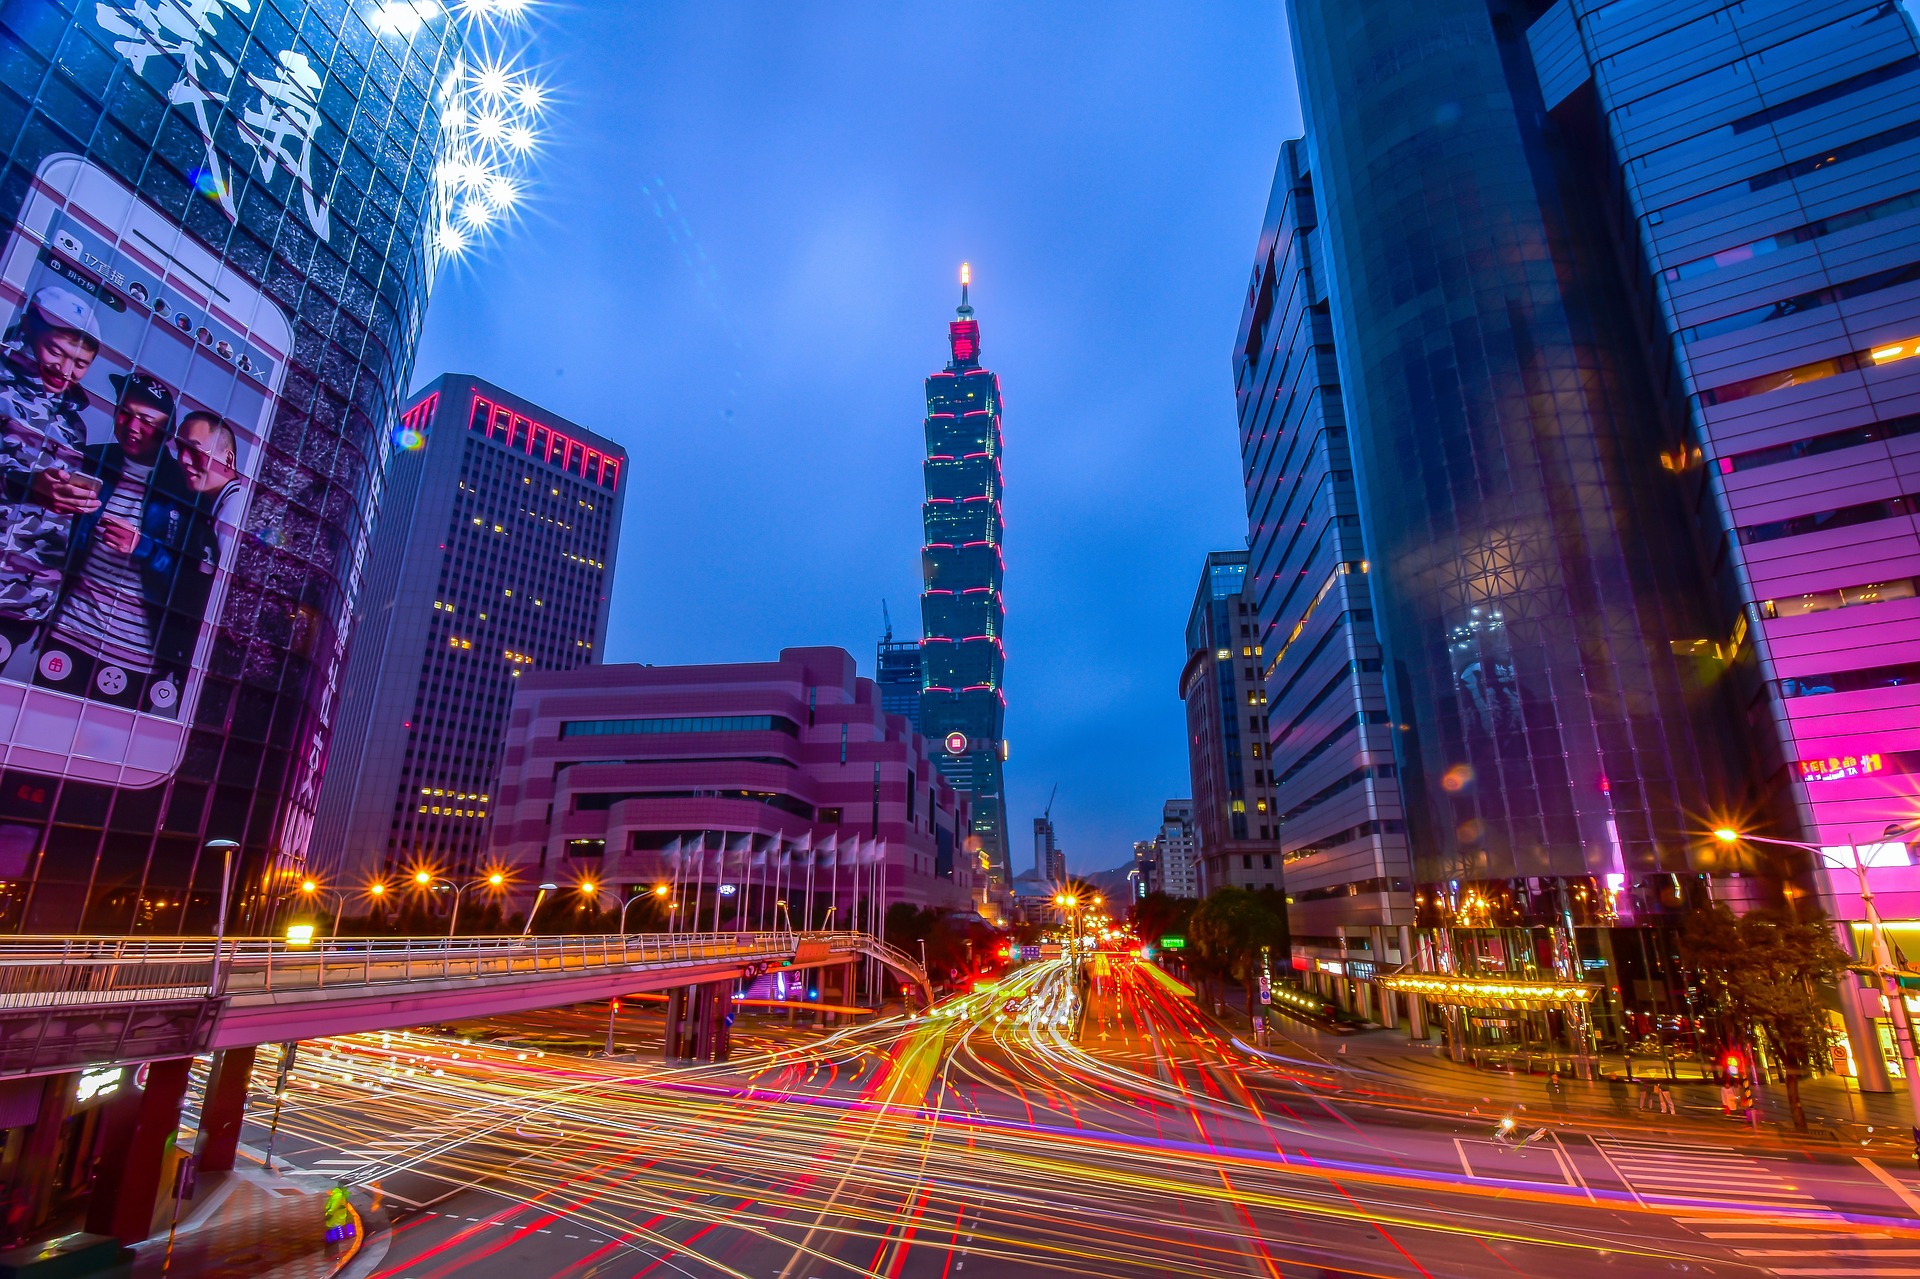 Taipei 101 Street Level with Light Trails